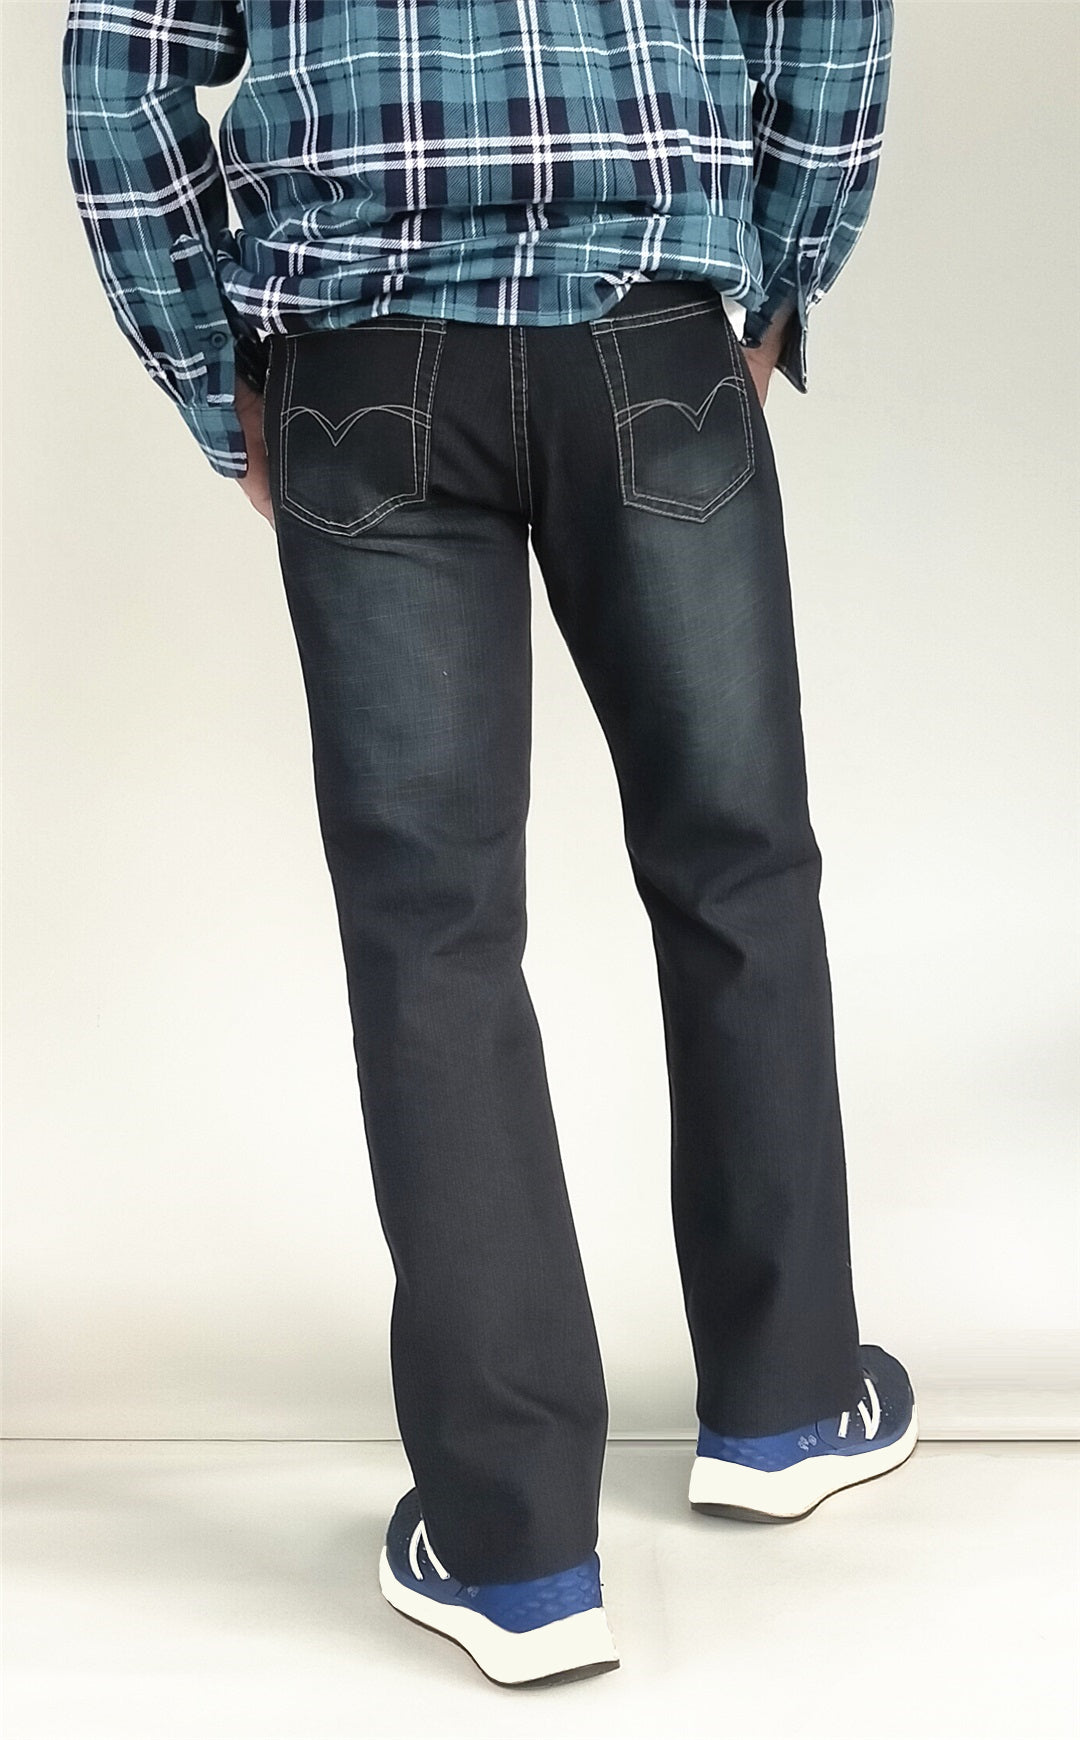 Men JEANIUS JEANS Thomas Slim Bootcut Jeans in black - Mid rise